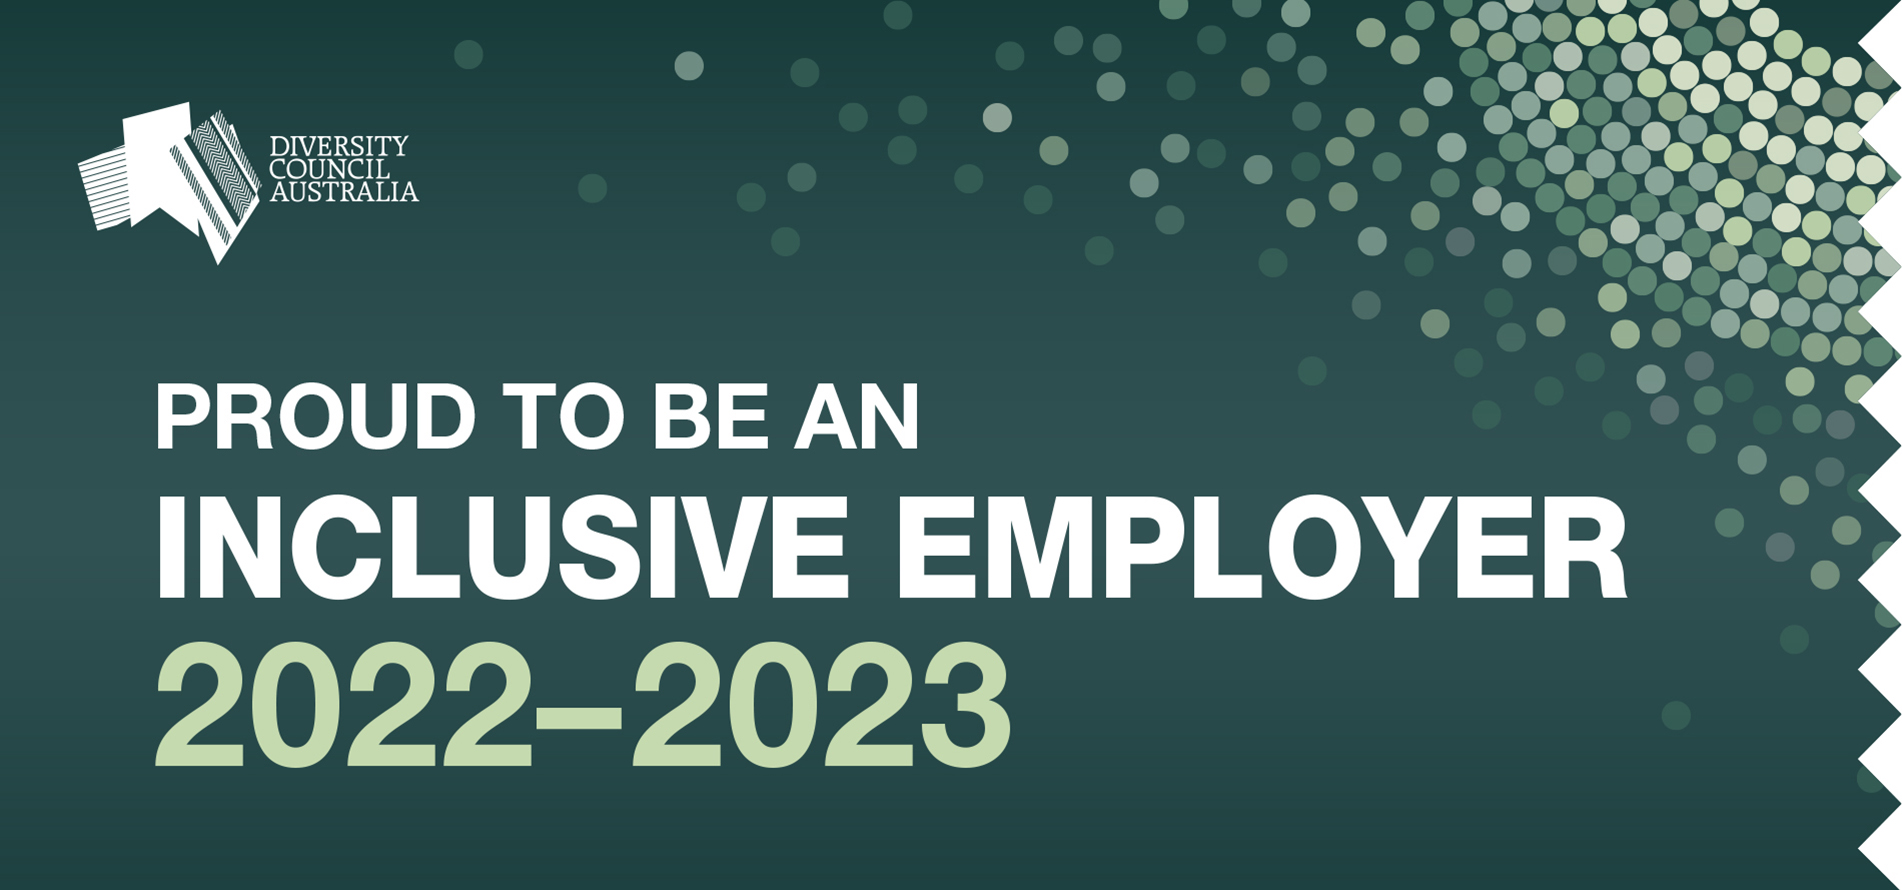 Diversity Council Australia - Proud to be an Inclusive Employer 2022-2023